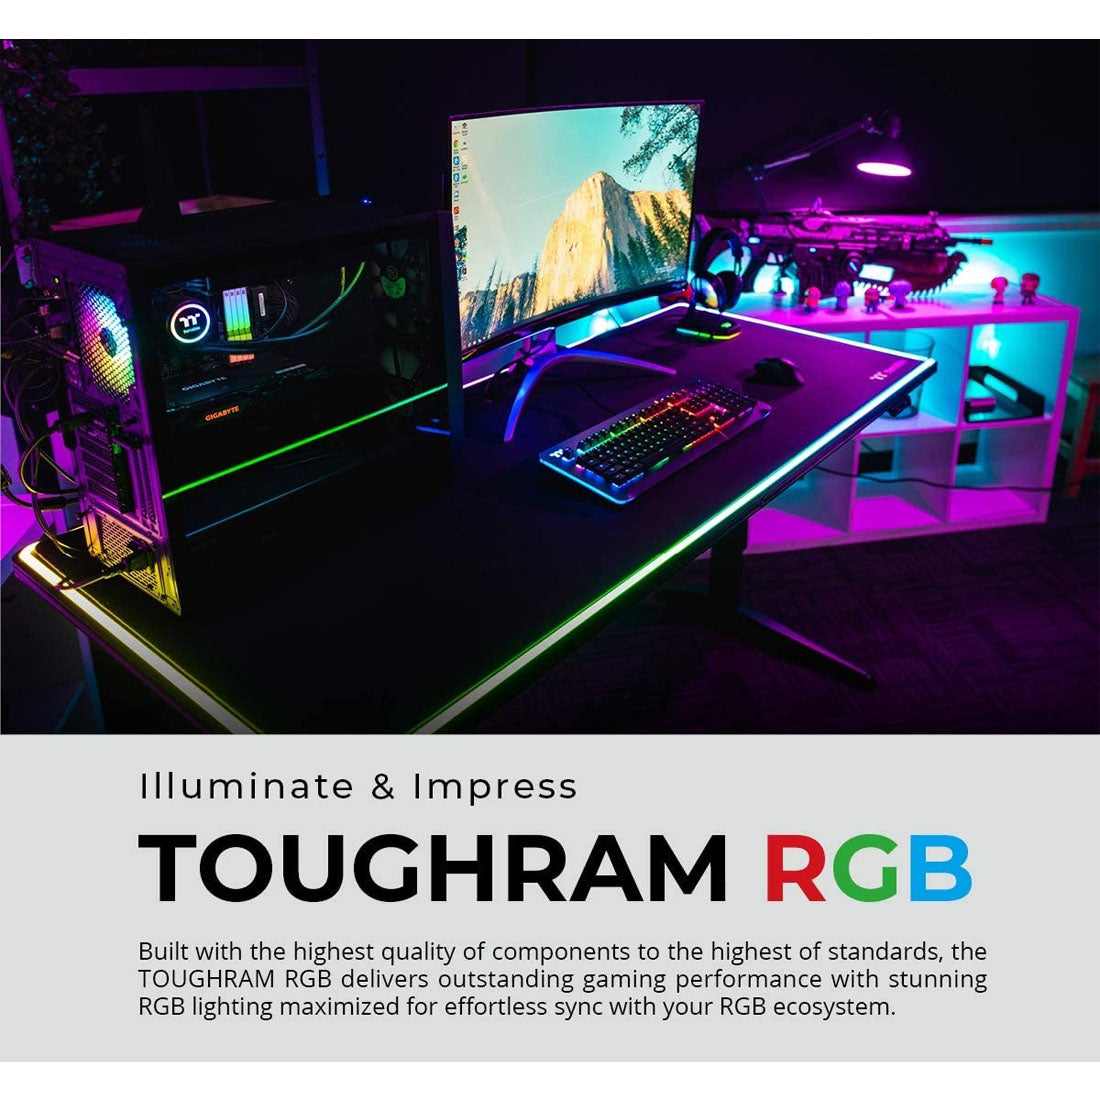 Thermaltake ToughRAM RGB 16GB(2x8GB) DDR4 RAM 3600MHz CL18 Desktop Memory